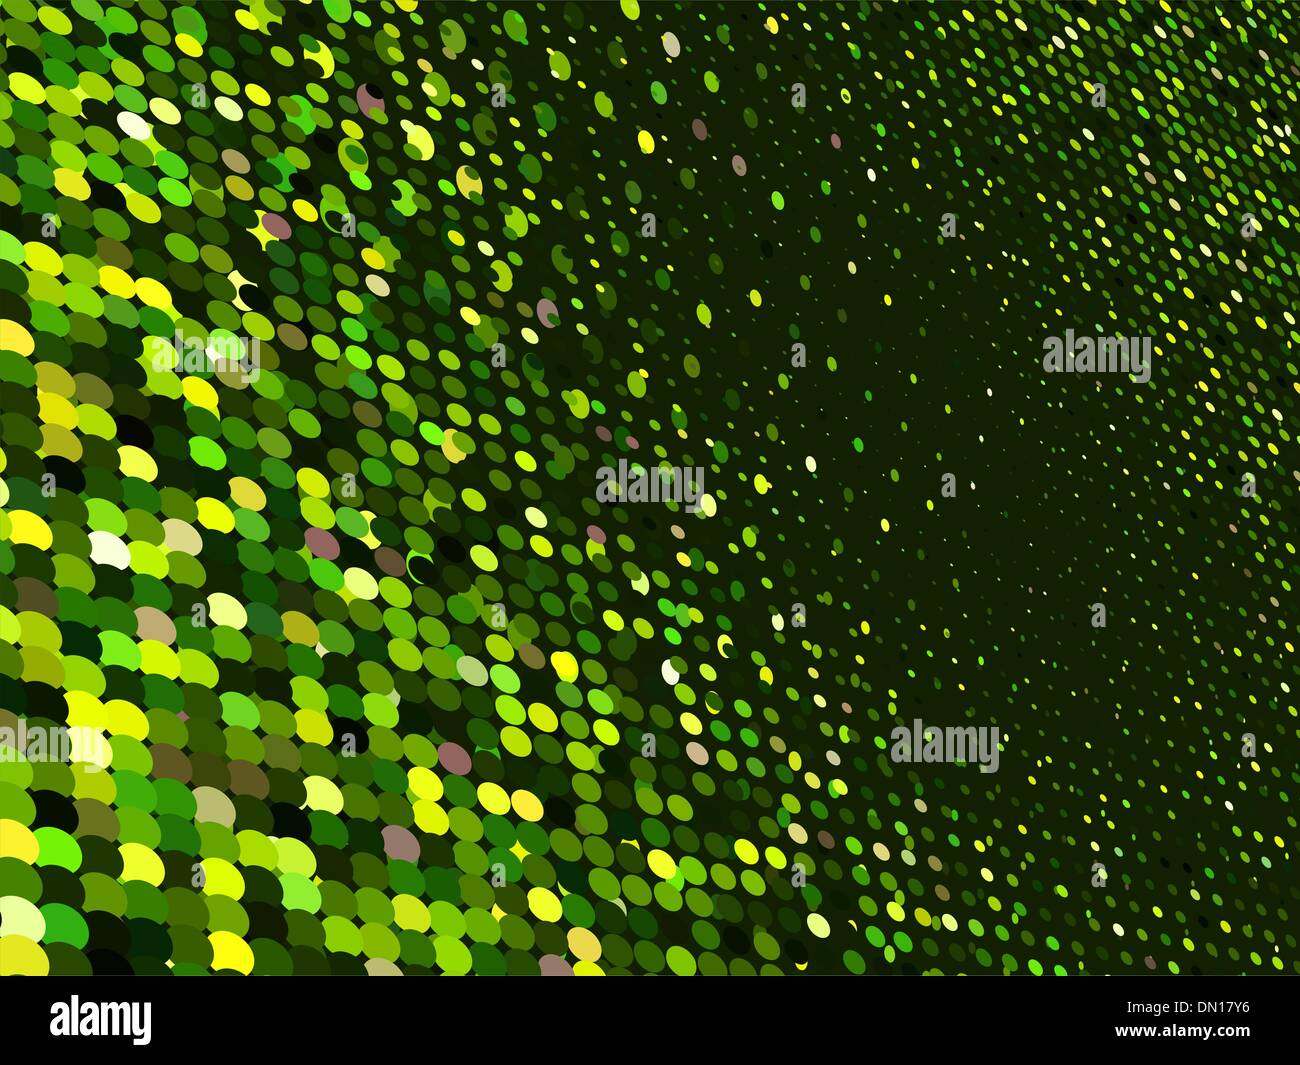 Abstrakte Dot grün Mosaik Hintergrund. EPS 8 Stock Vektor